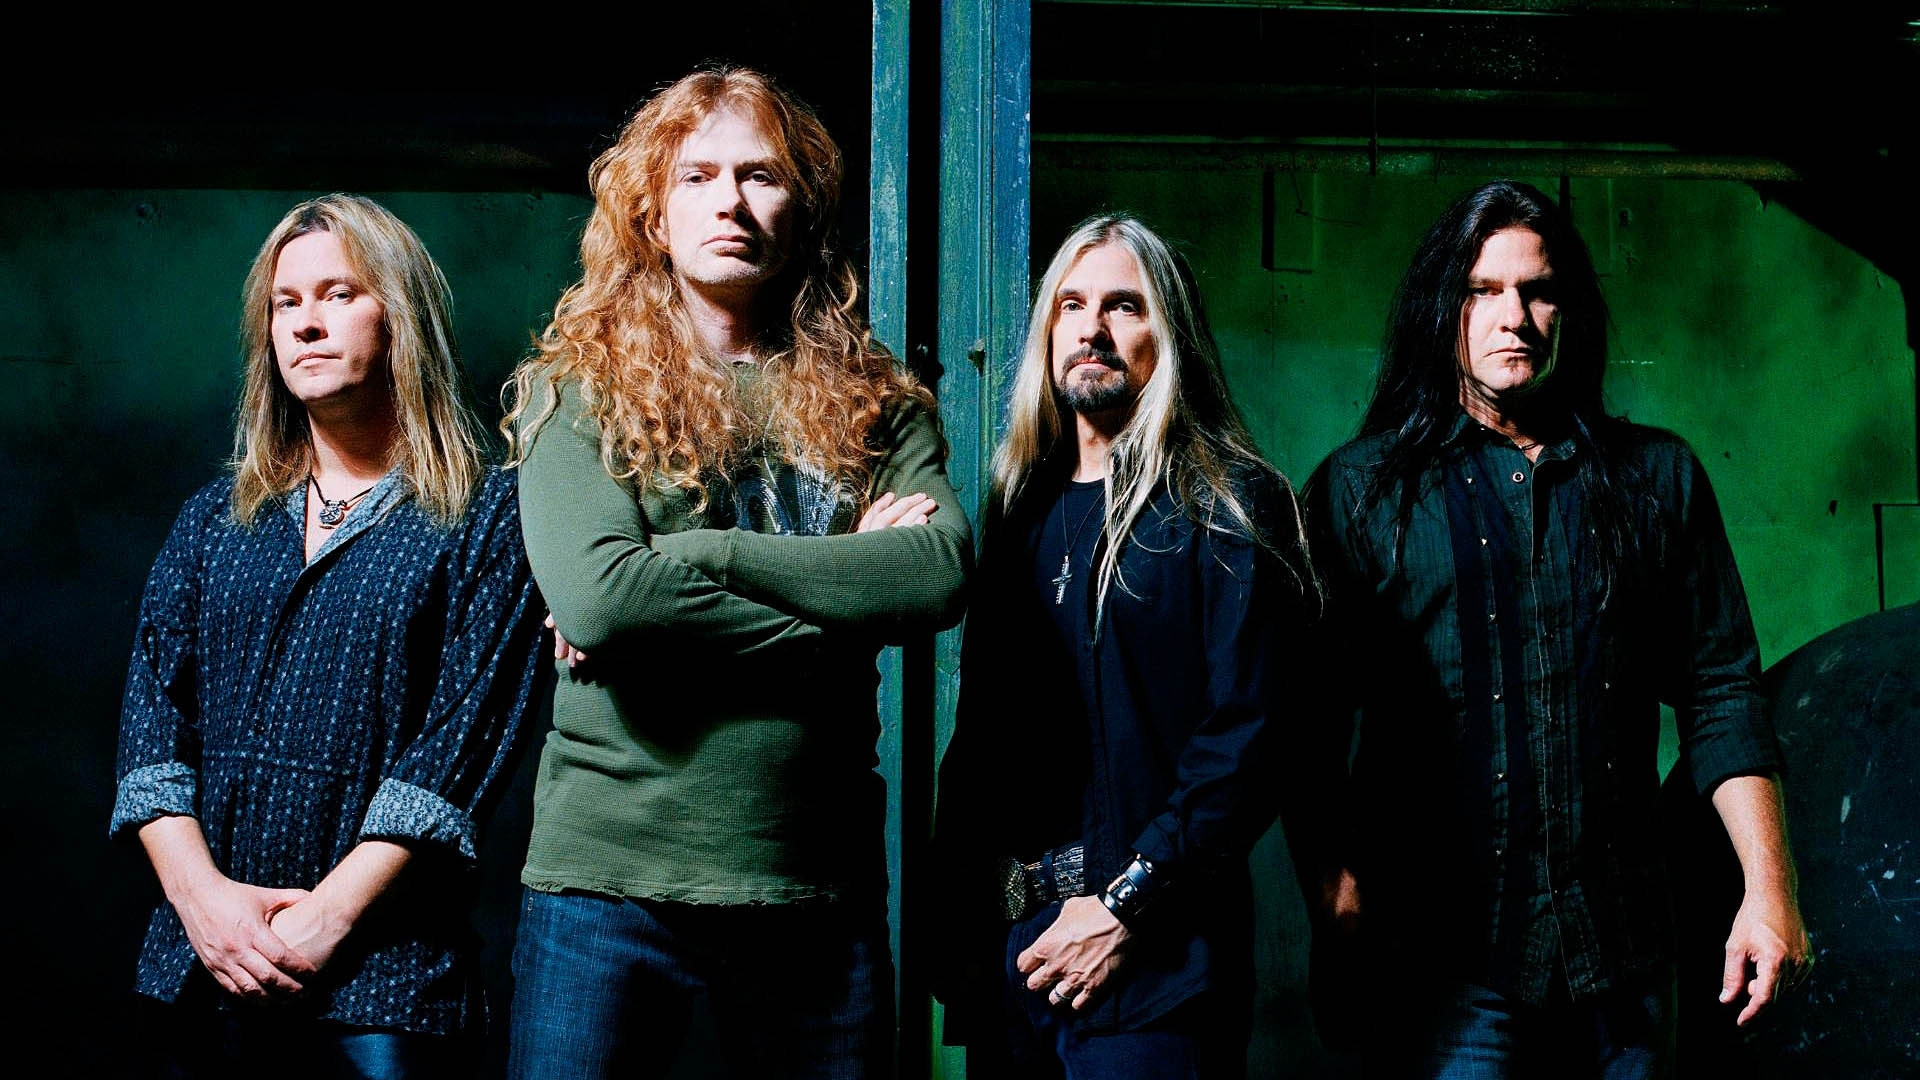 Descarga gratuita de fondo de pantalla para móvil de Megadeth, Música.